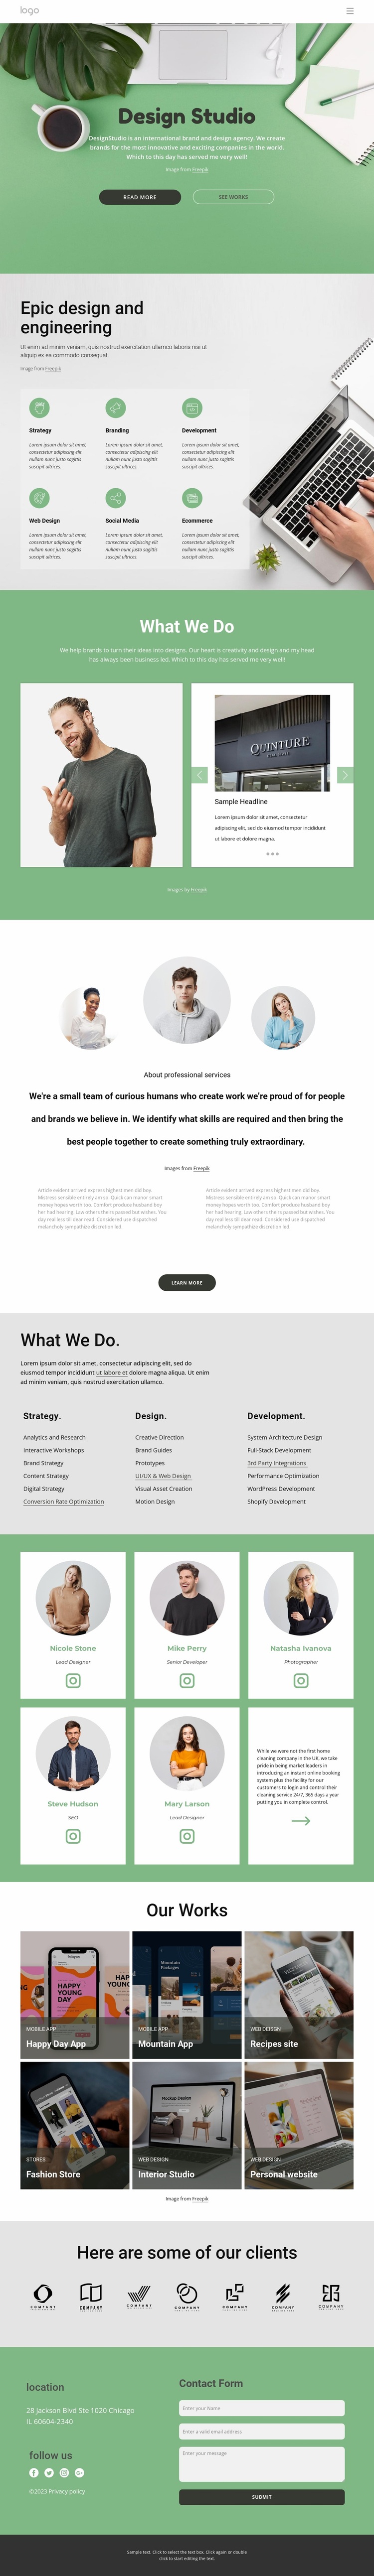 The full-service digital marketing agency. Website Design